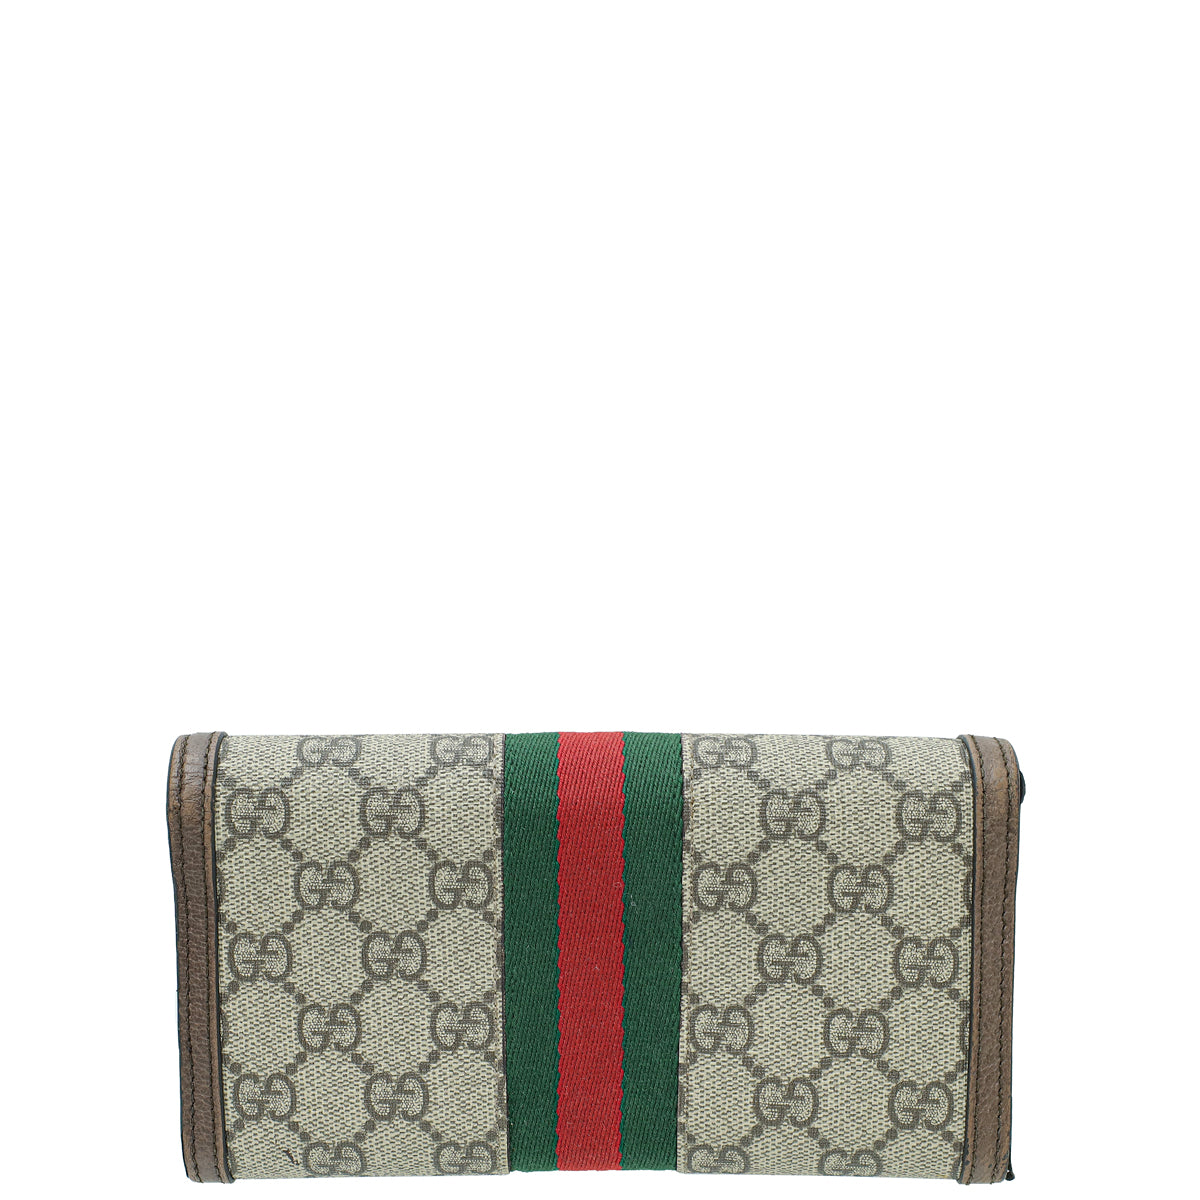 Gucci Bicolor GG Supreme Ophidia Continental Wallet